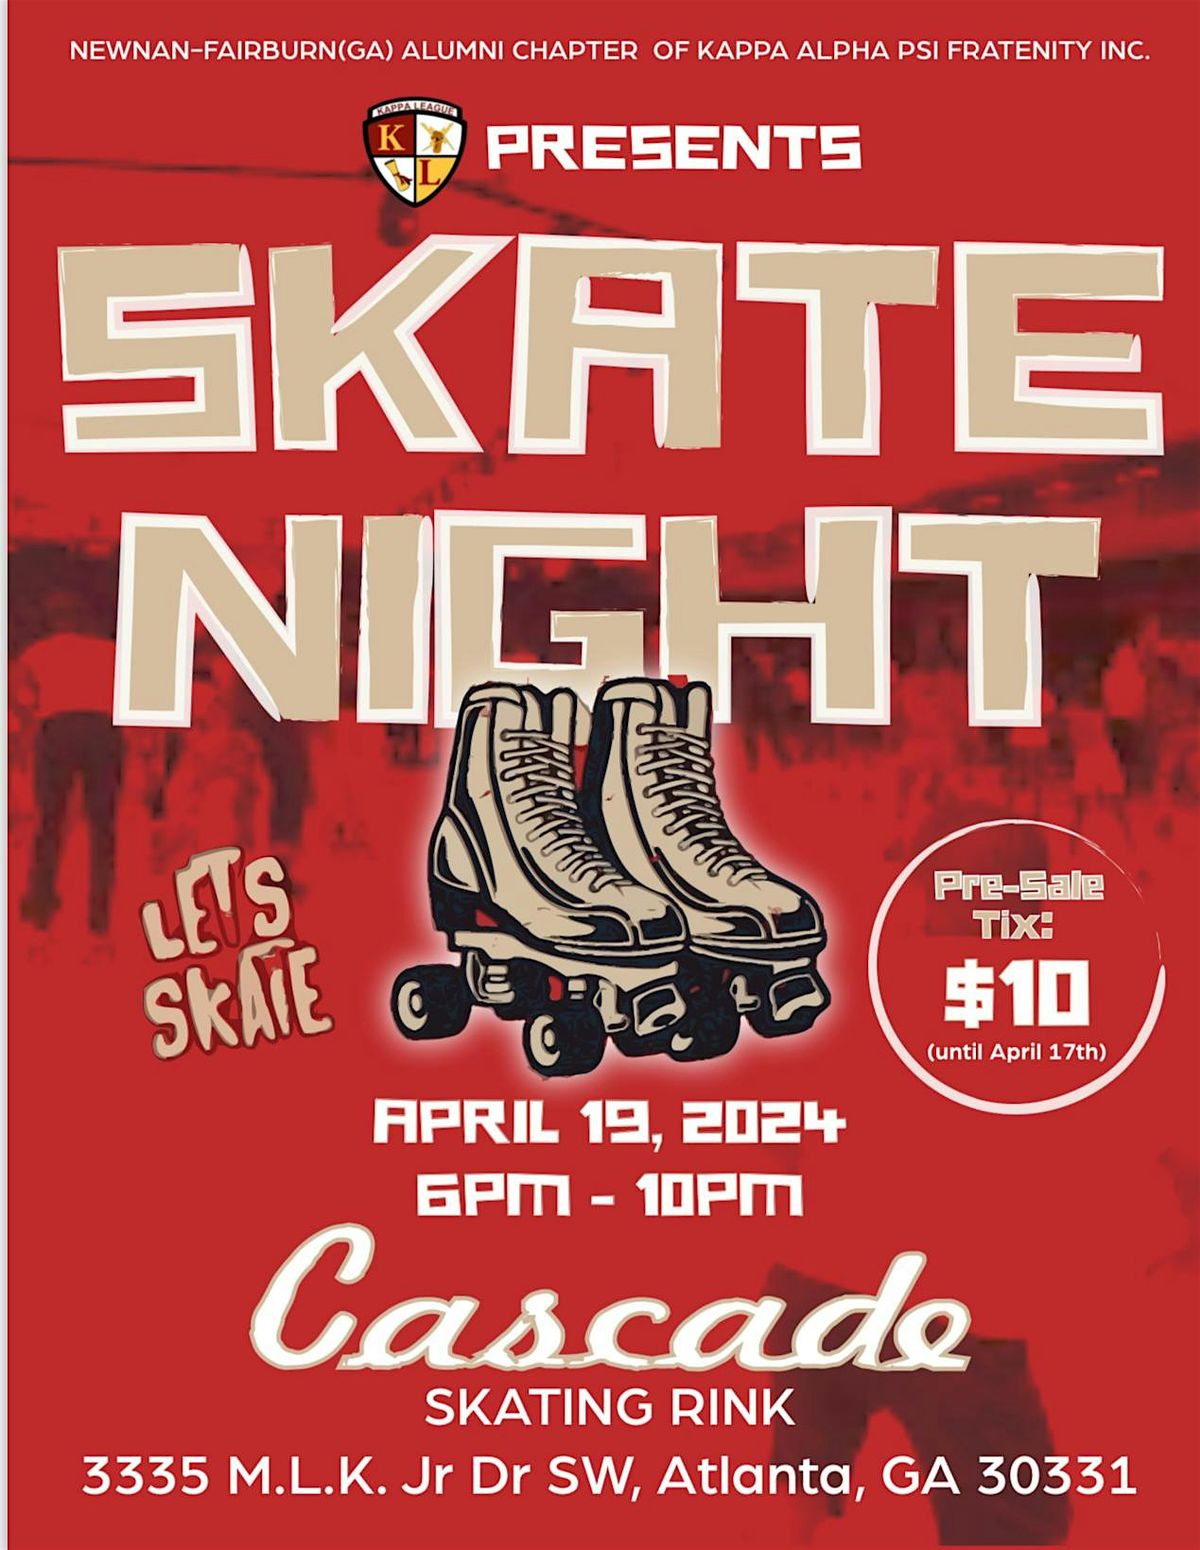 Kappa League Skate Night